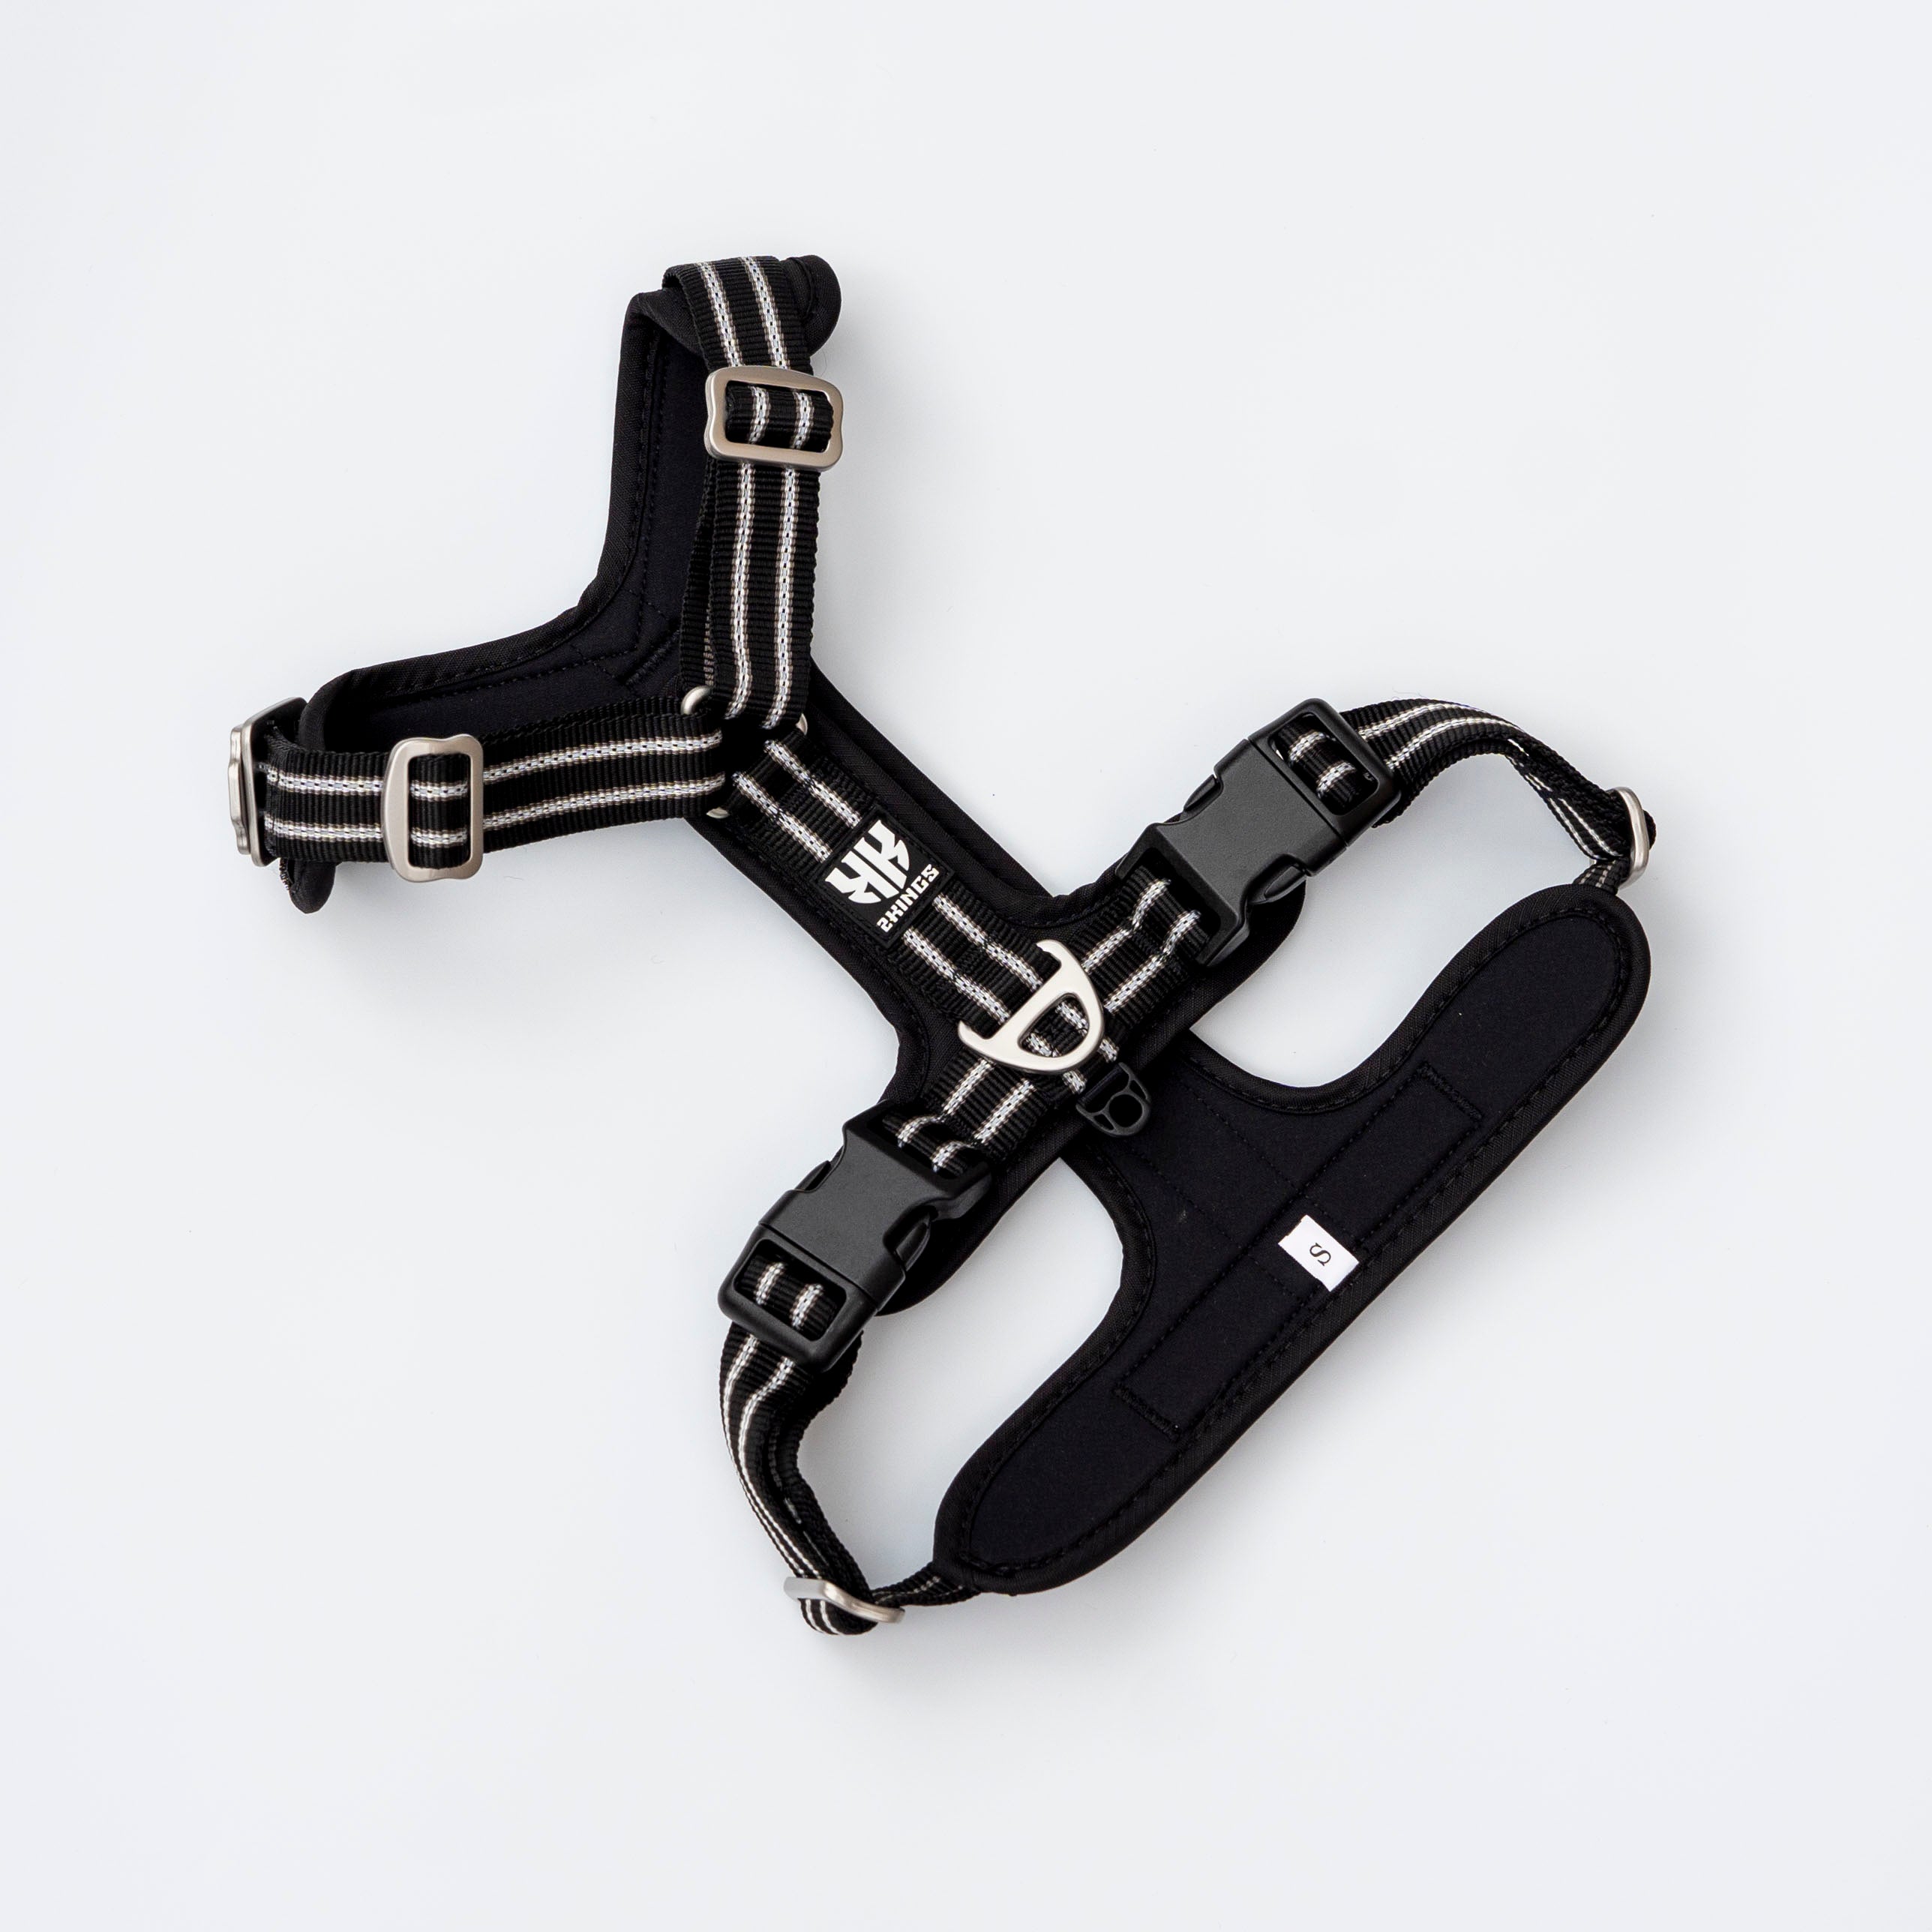 Adjustable Dog Harness & Classic Lead Set- Reflective & Lightweight - Black.